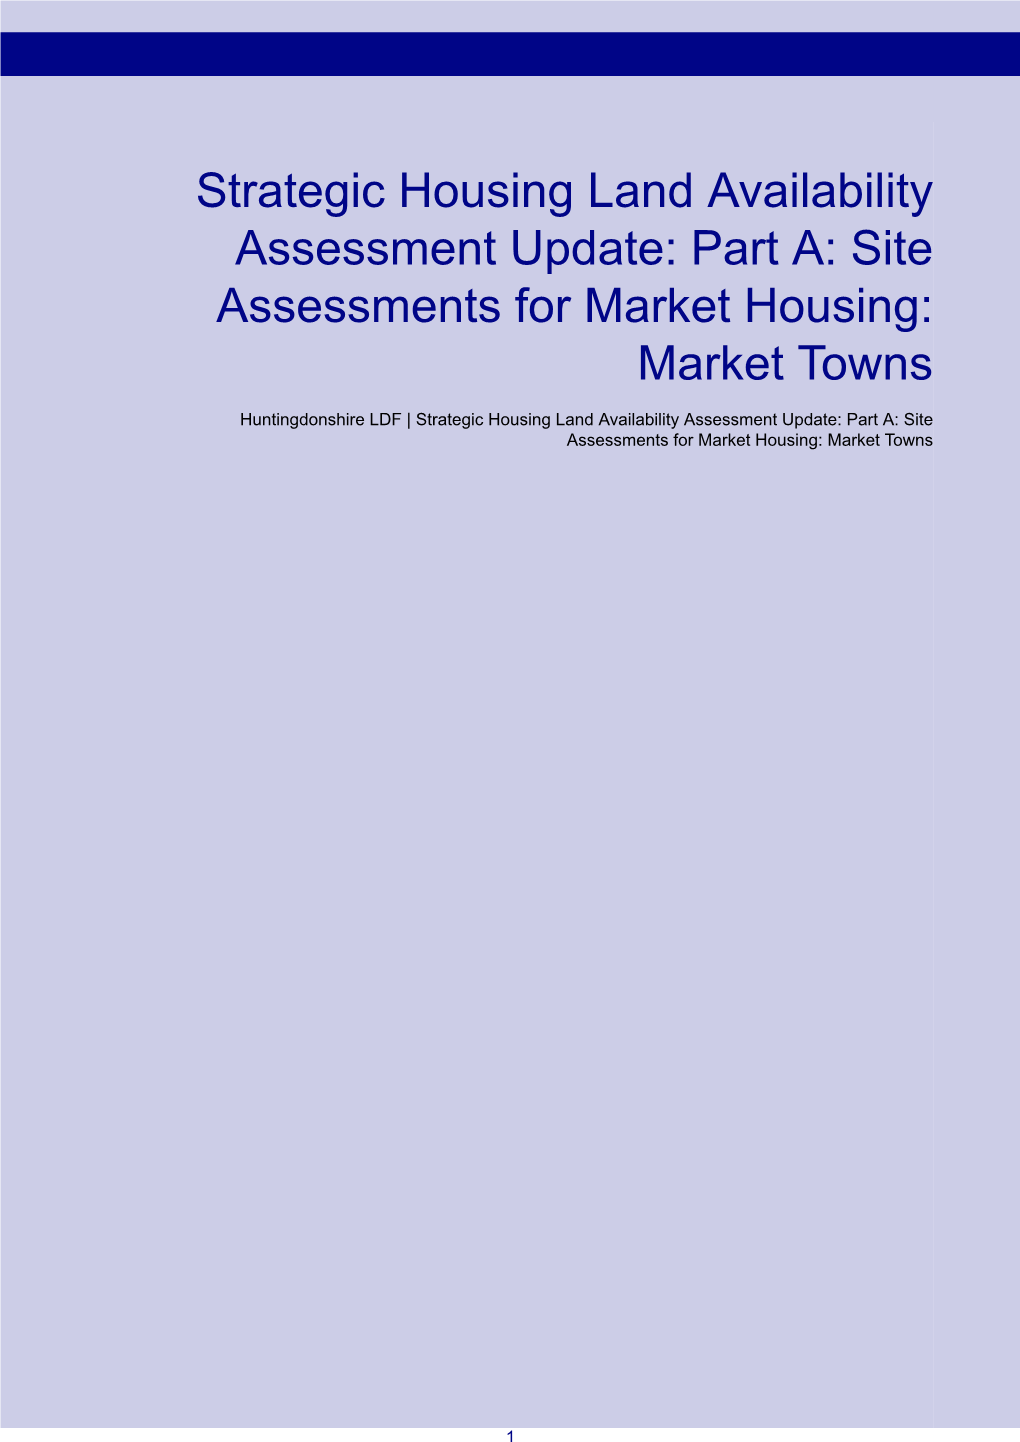 Strategic Housing Land Availability Assessment Update: Part A: Site Assessments for Market Housing: Market Towns